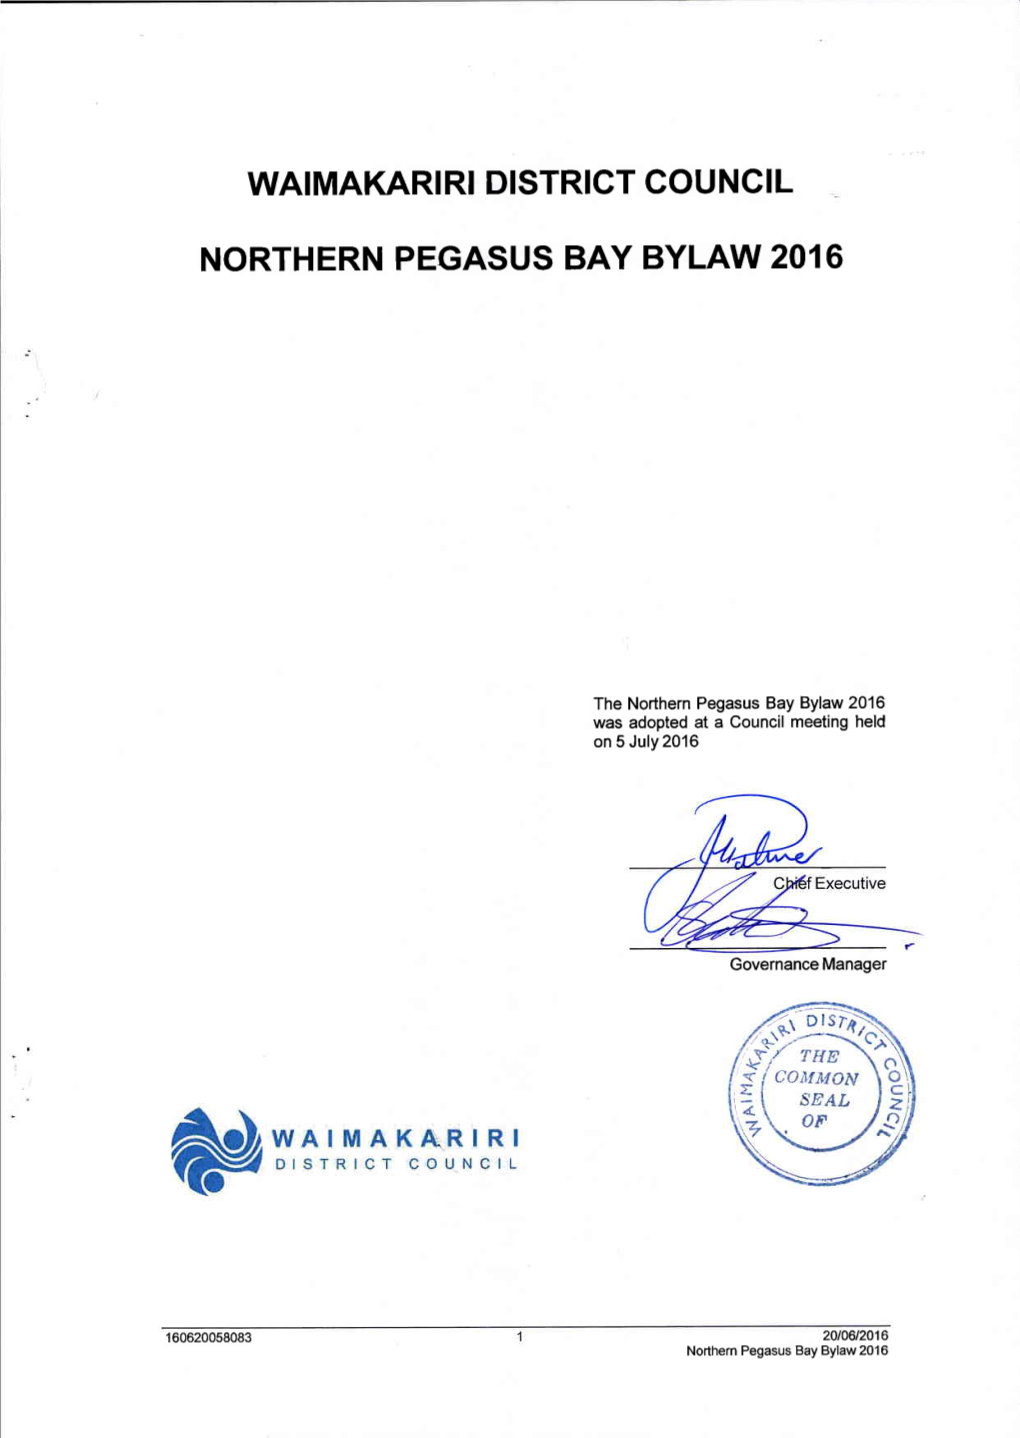 Northern Pegasus Bay Bylaw 2016